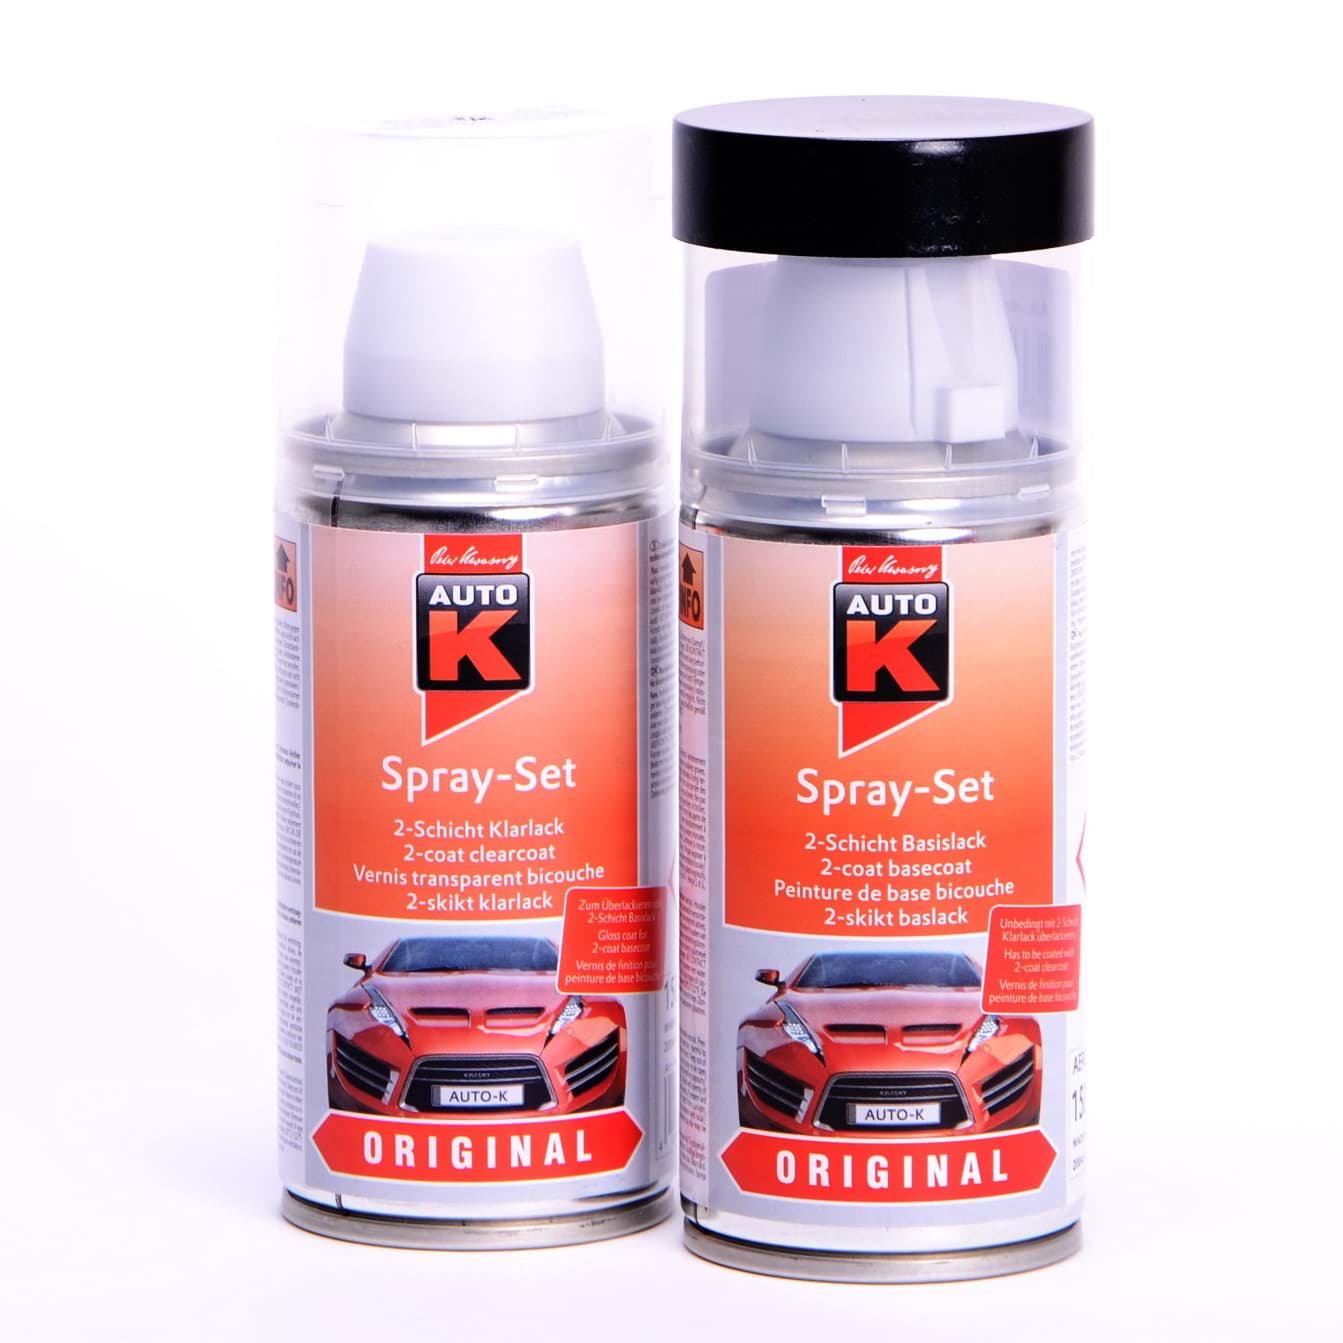 Picture of Auto-K Spray-Set Autolack für Peugeot KMF Bleu Recife Nacre met 42370